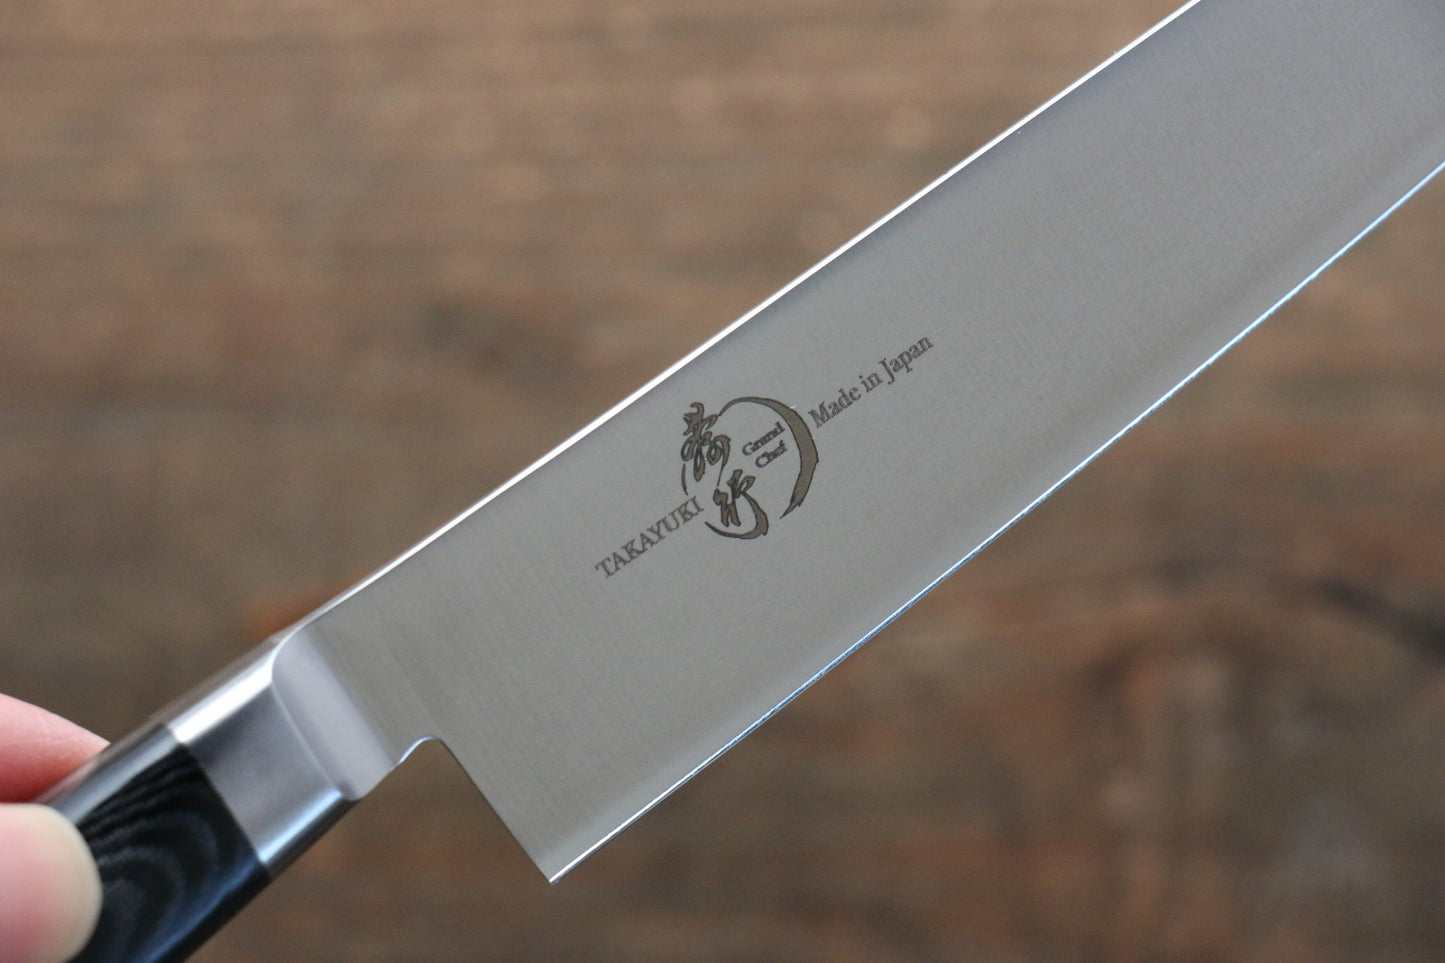 Sakai Takayuki Sakai Takayuki  Grand Chef Grand Chef Stainless Steel Petty-Utility Japanese Knife 150mm with Black Micarta Handle - Japanny - Best Japanese Knife